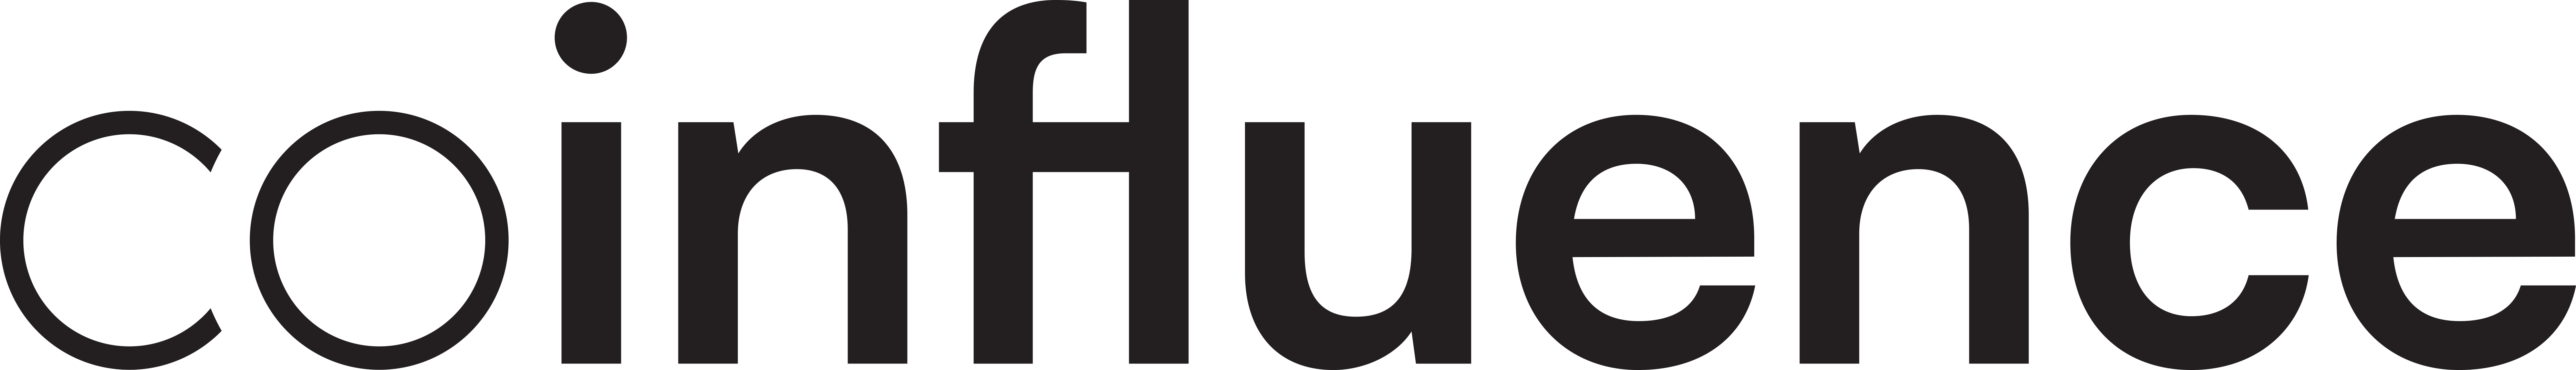 CO-INFLUENCE logo